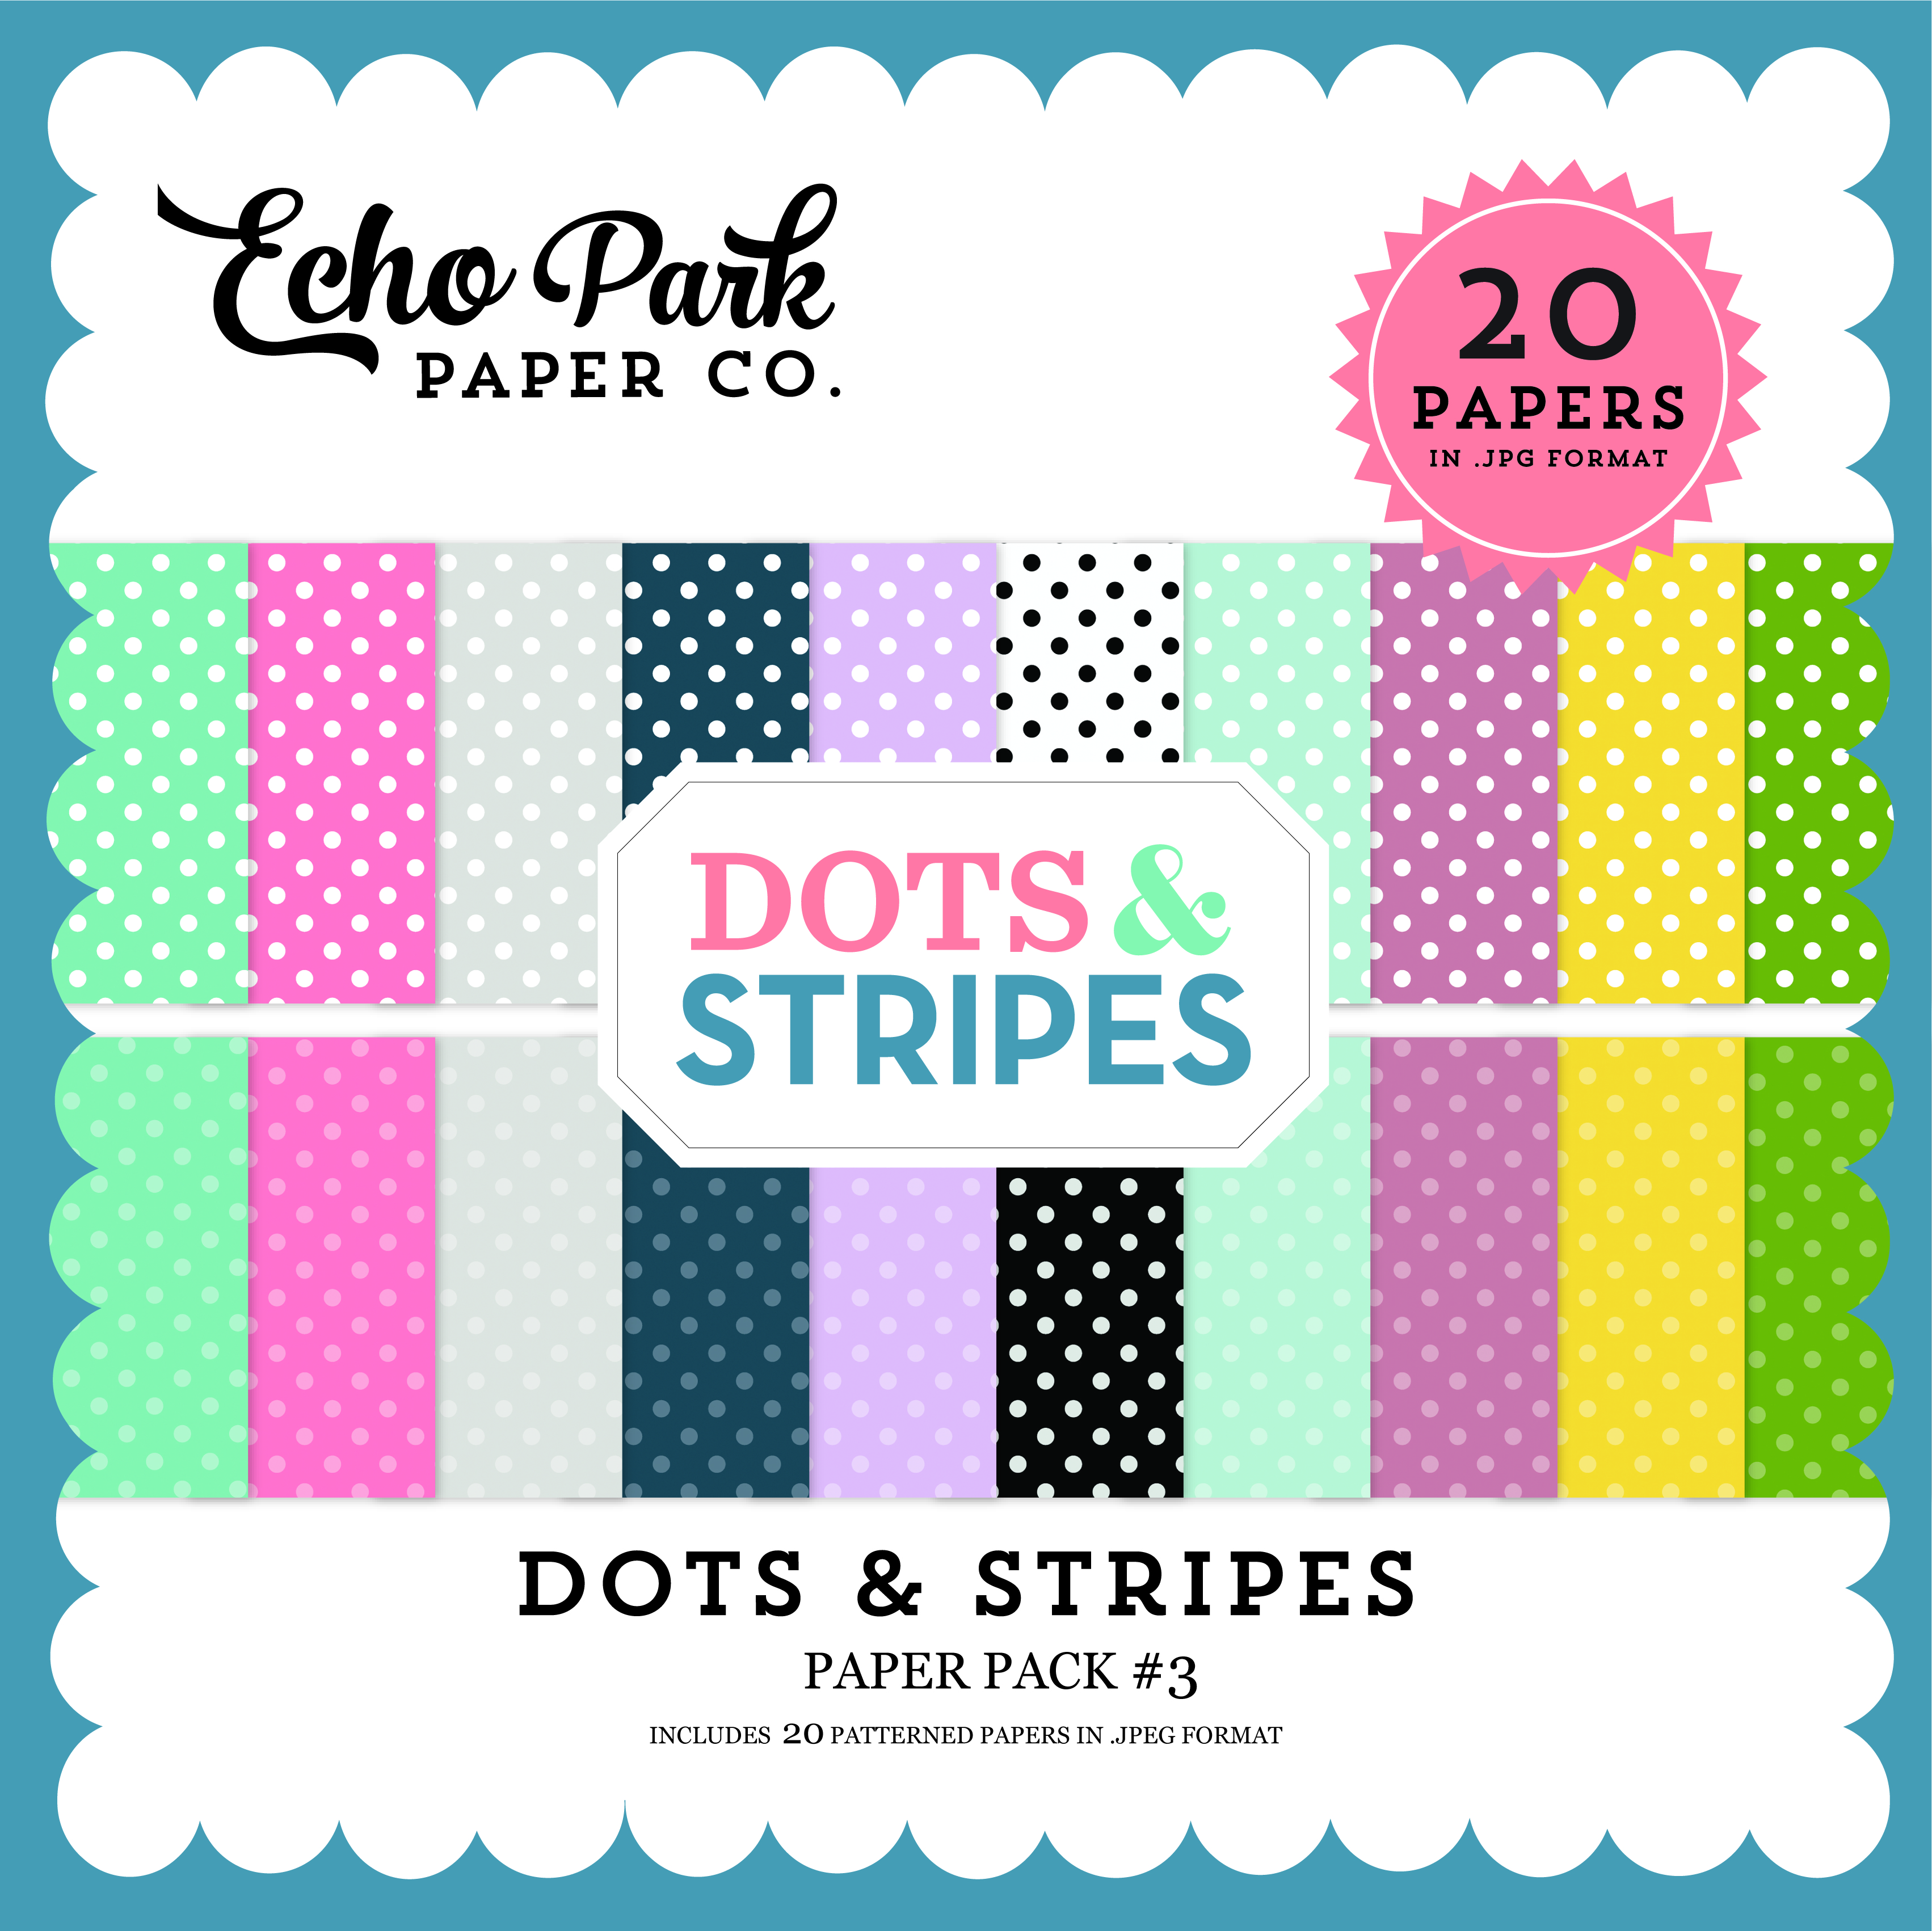 Dots & Stripes Paper Pack #3